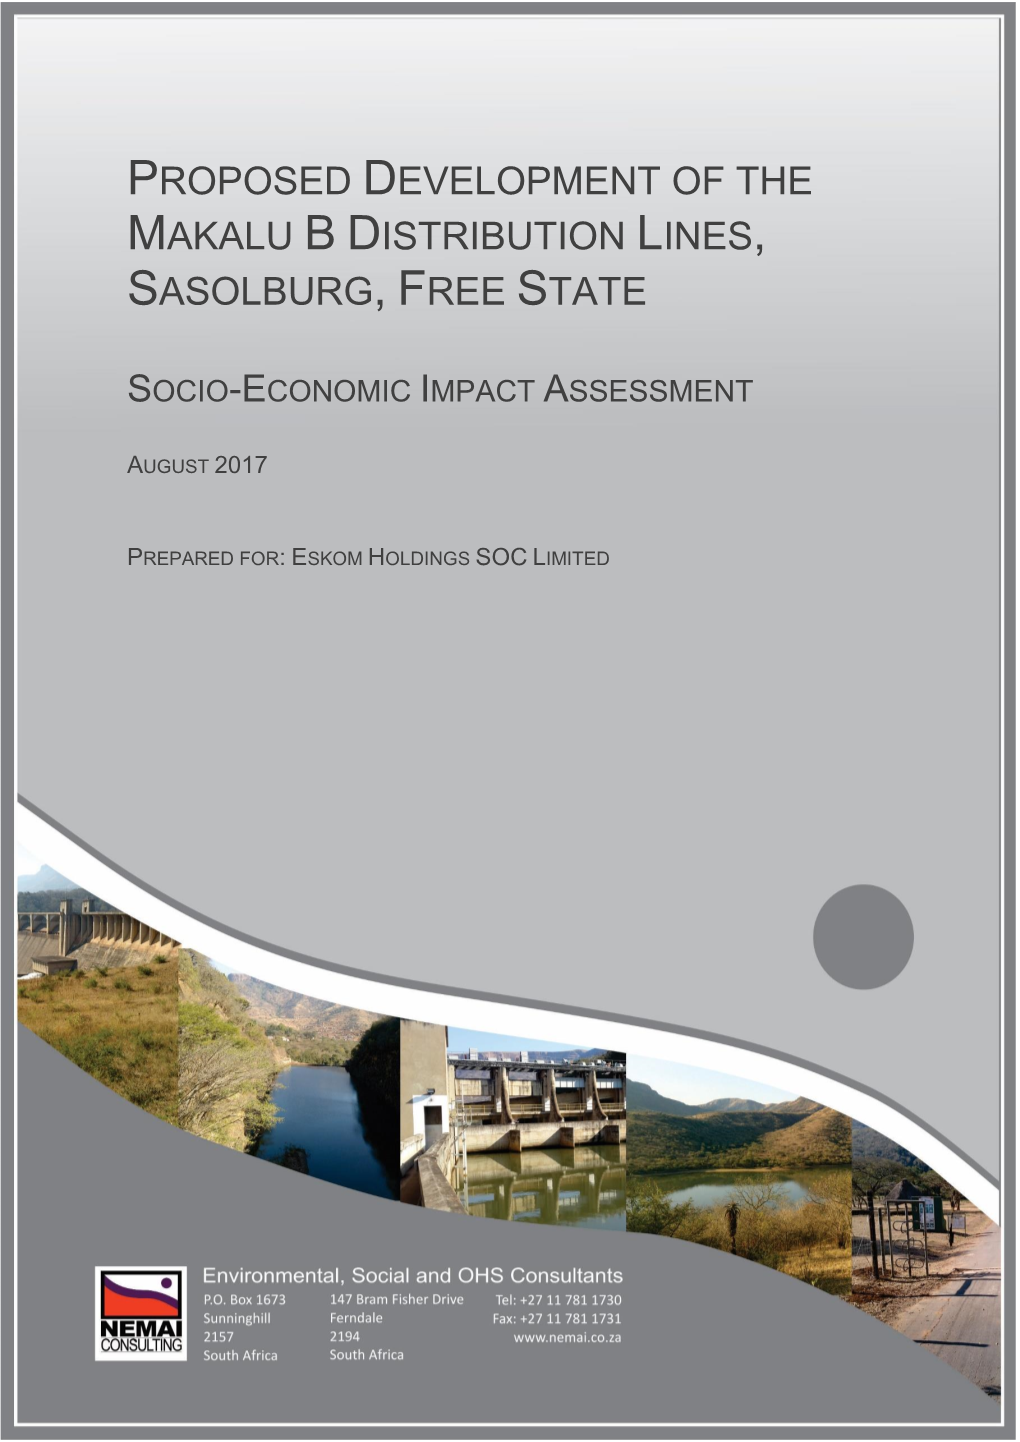 Proposed Development of the Makalu B Distribution Lines, Sasolburg, Free State